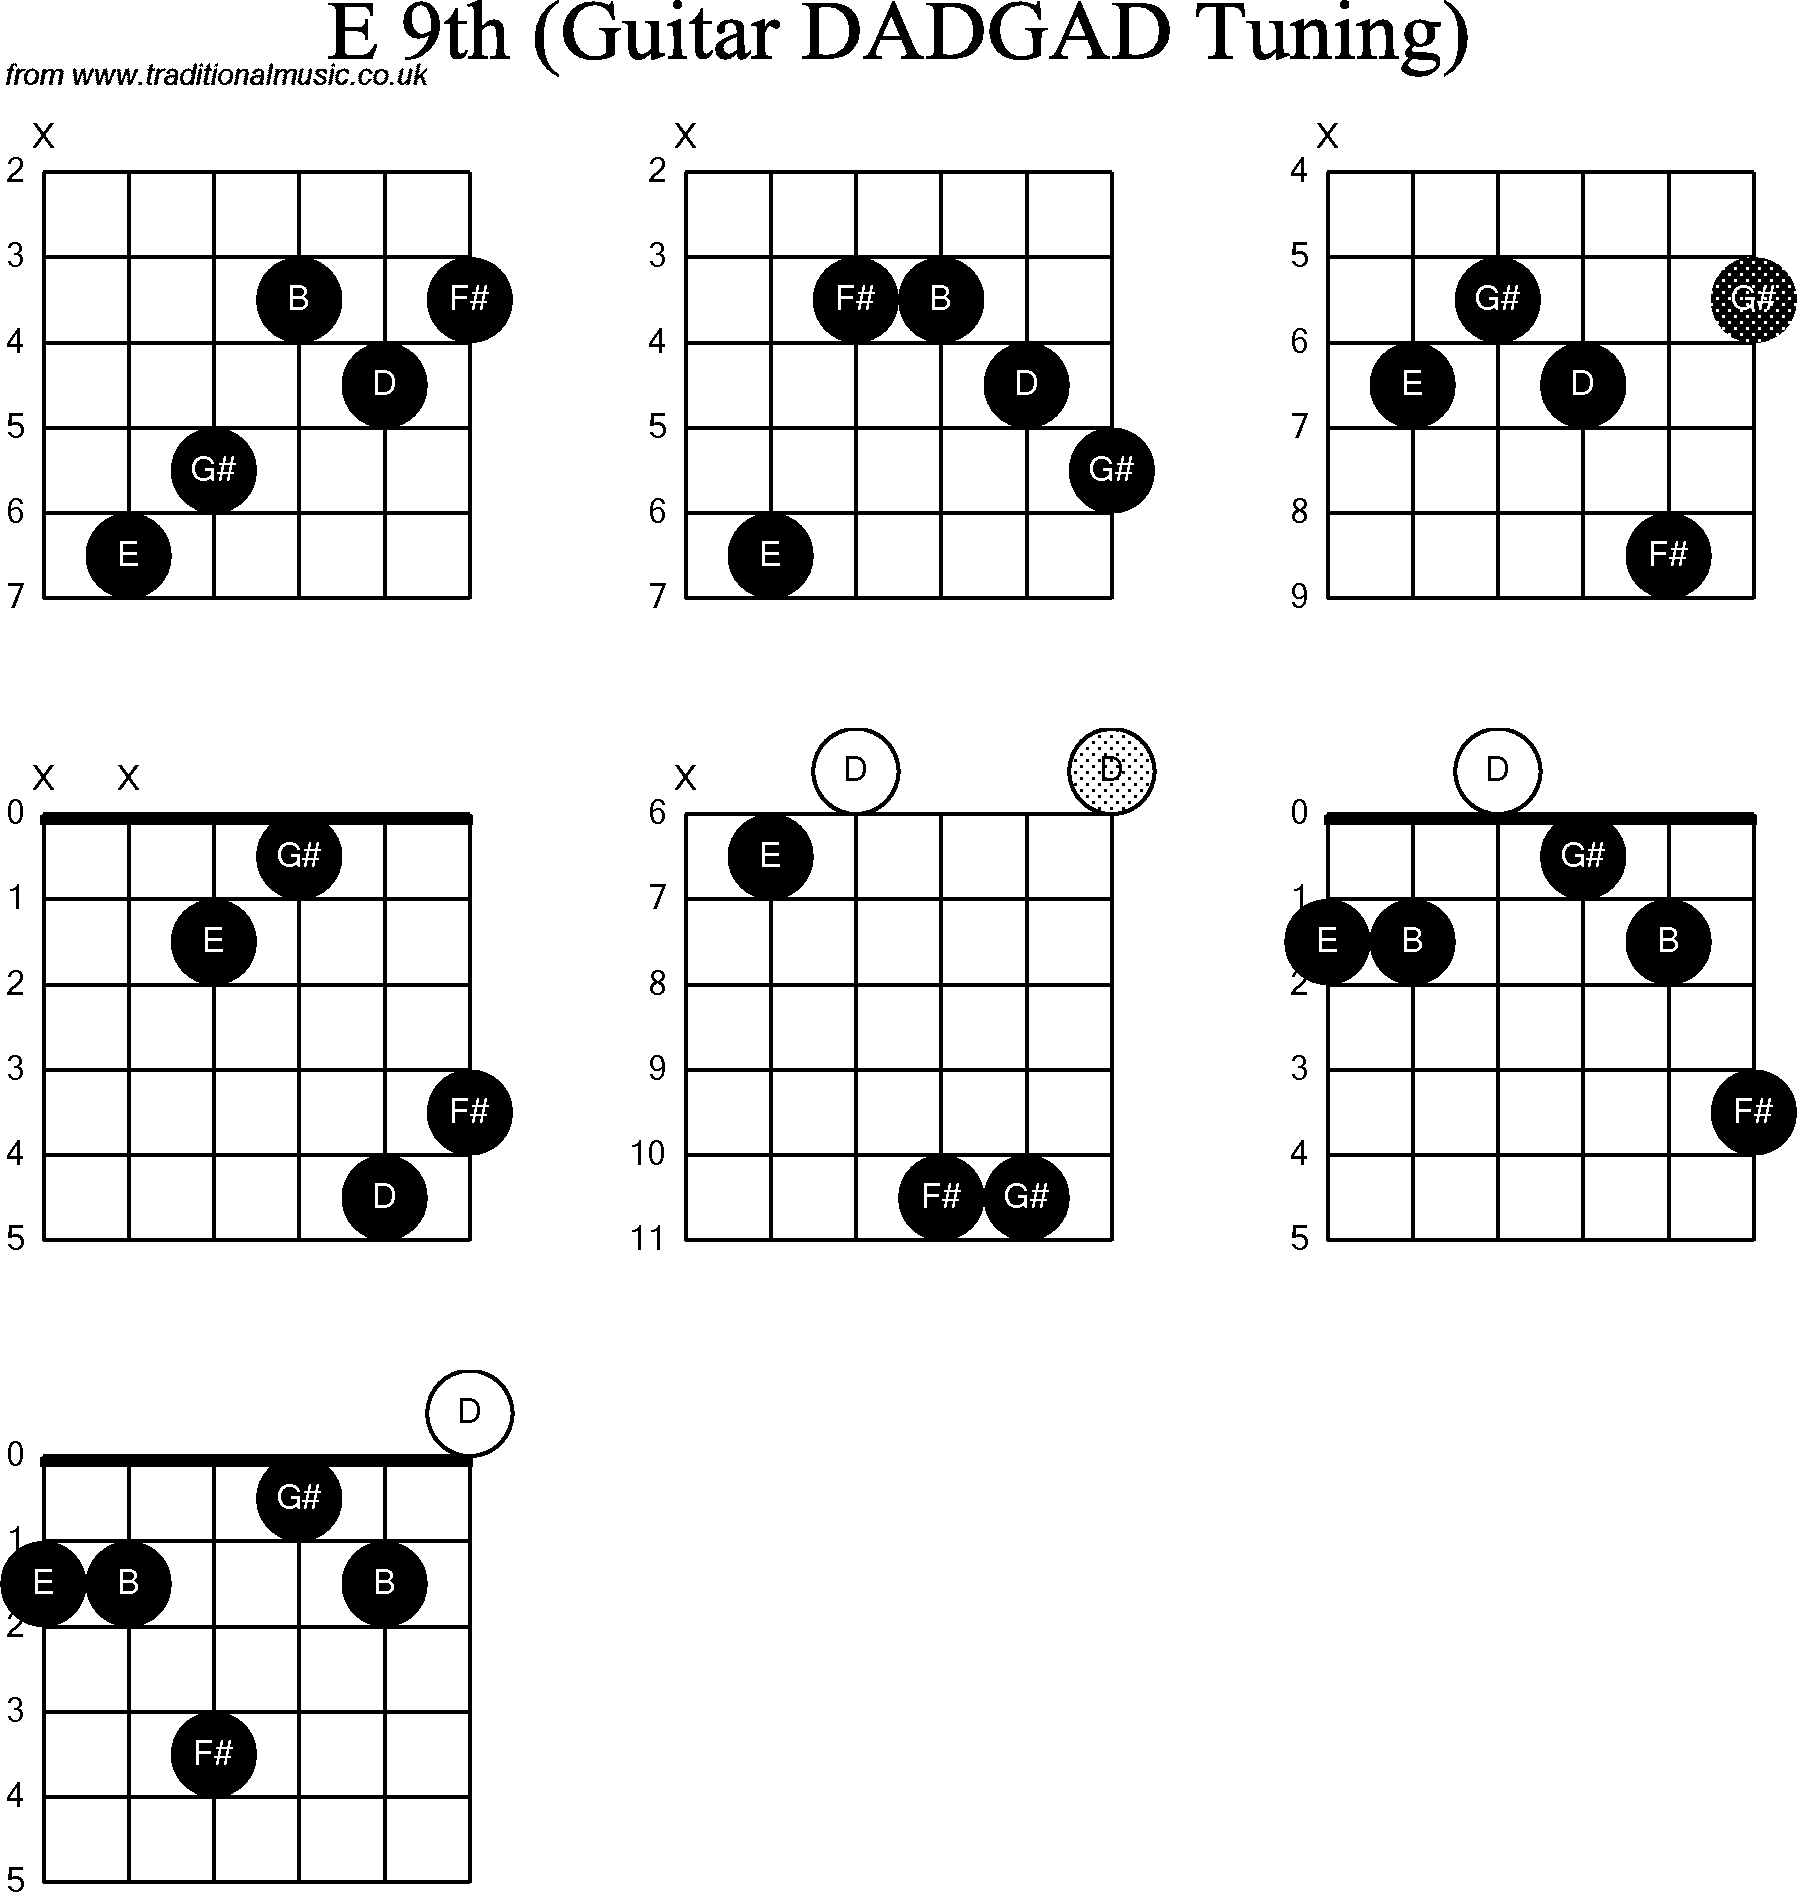 Chord Diagrams for D Modal Guitar(DADGAD), E9th